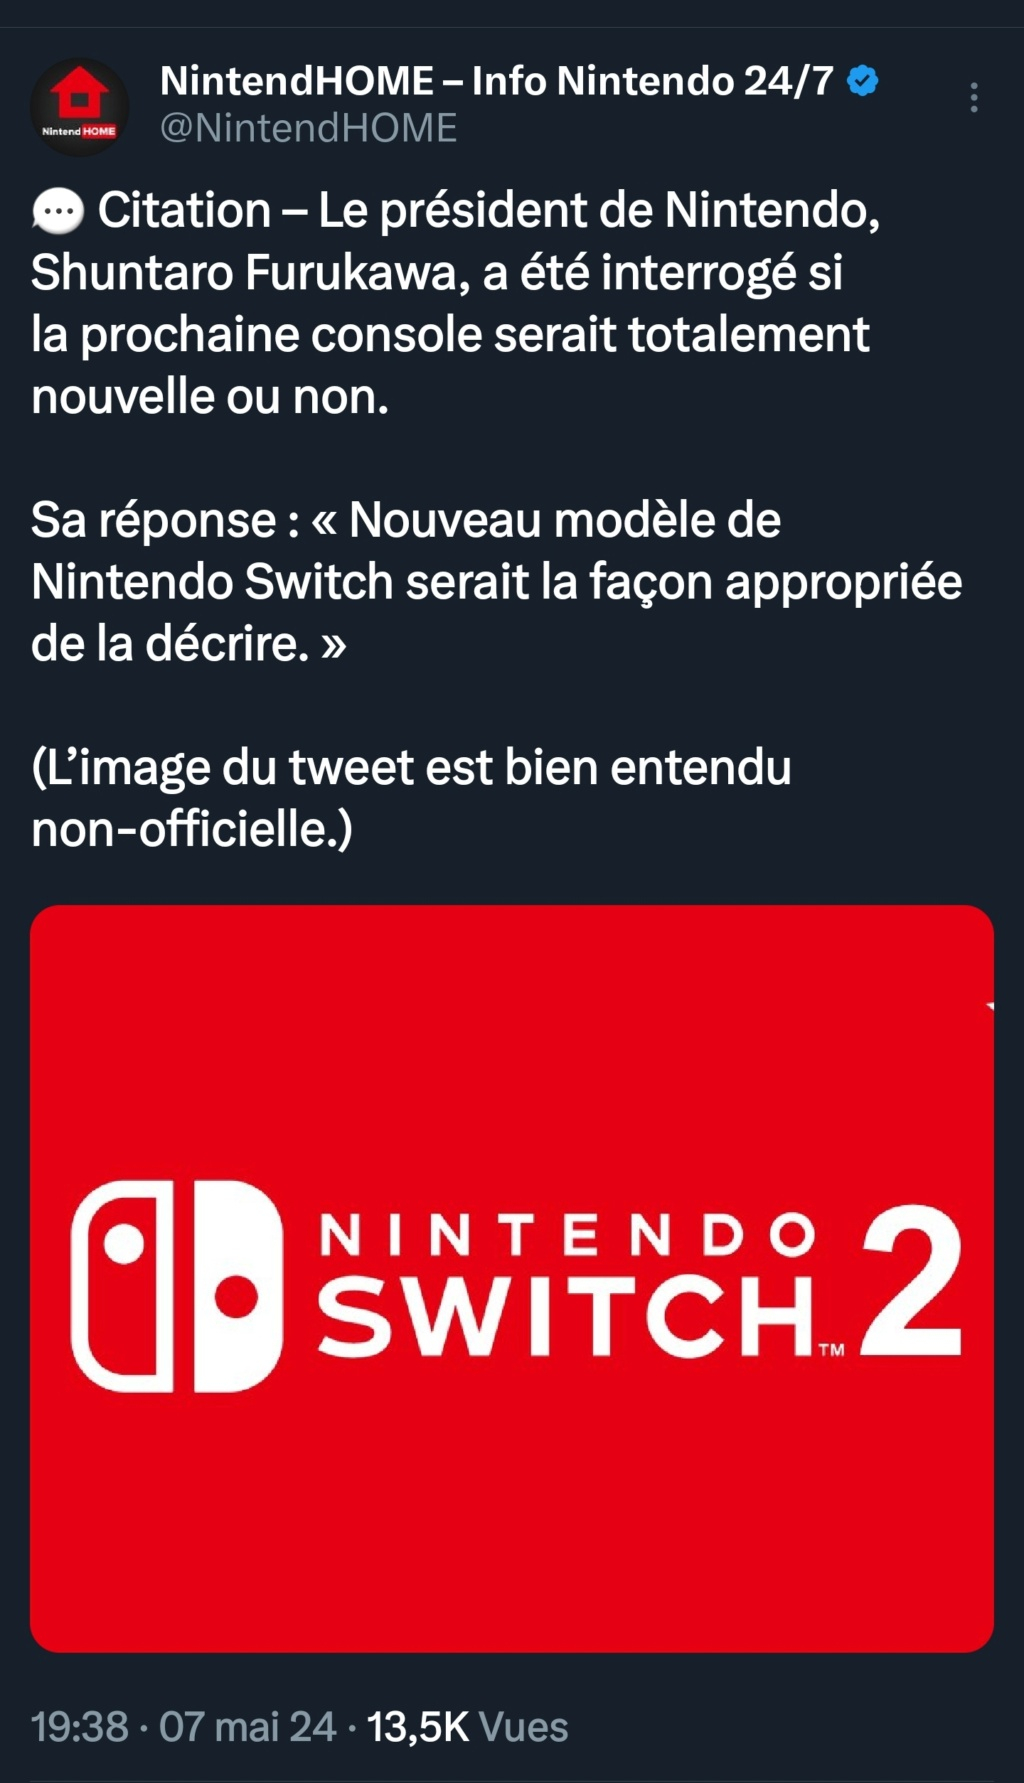 Nintendo Switch 2, le topic officiel des rumeurs - Page 15 Screen41